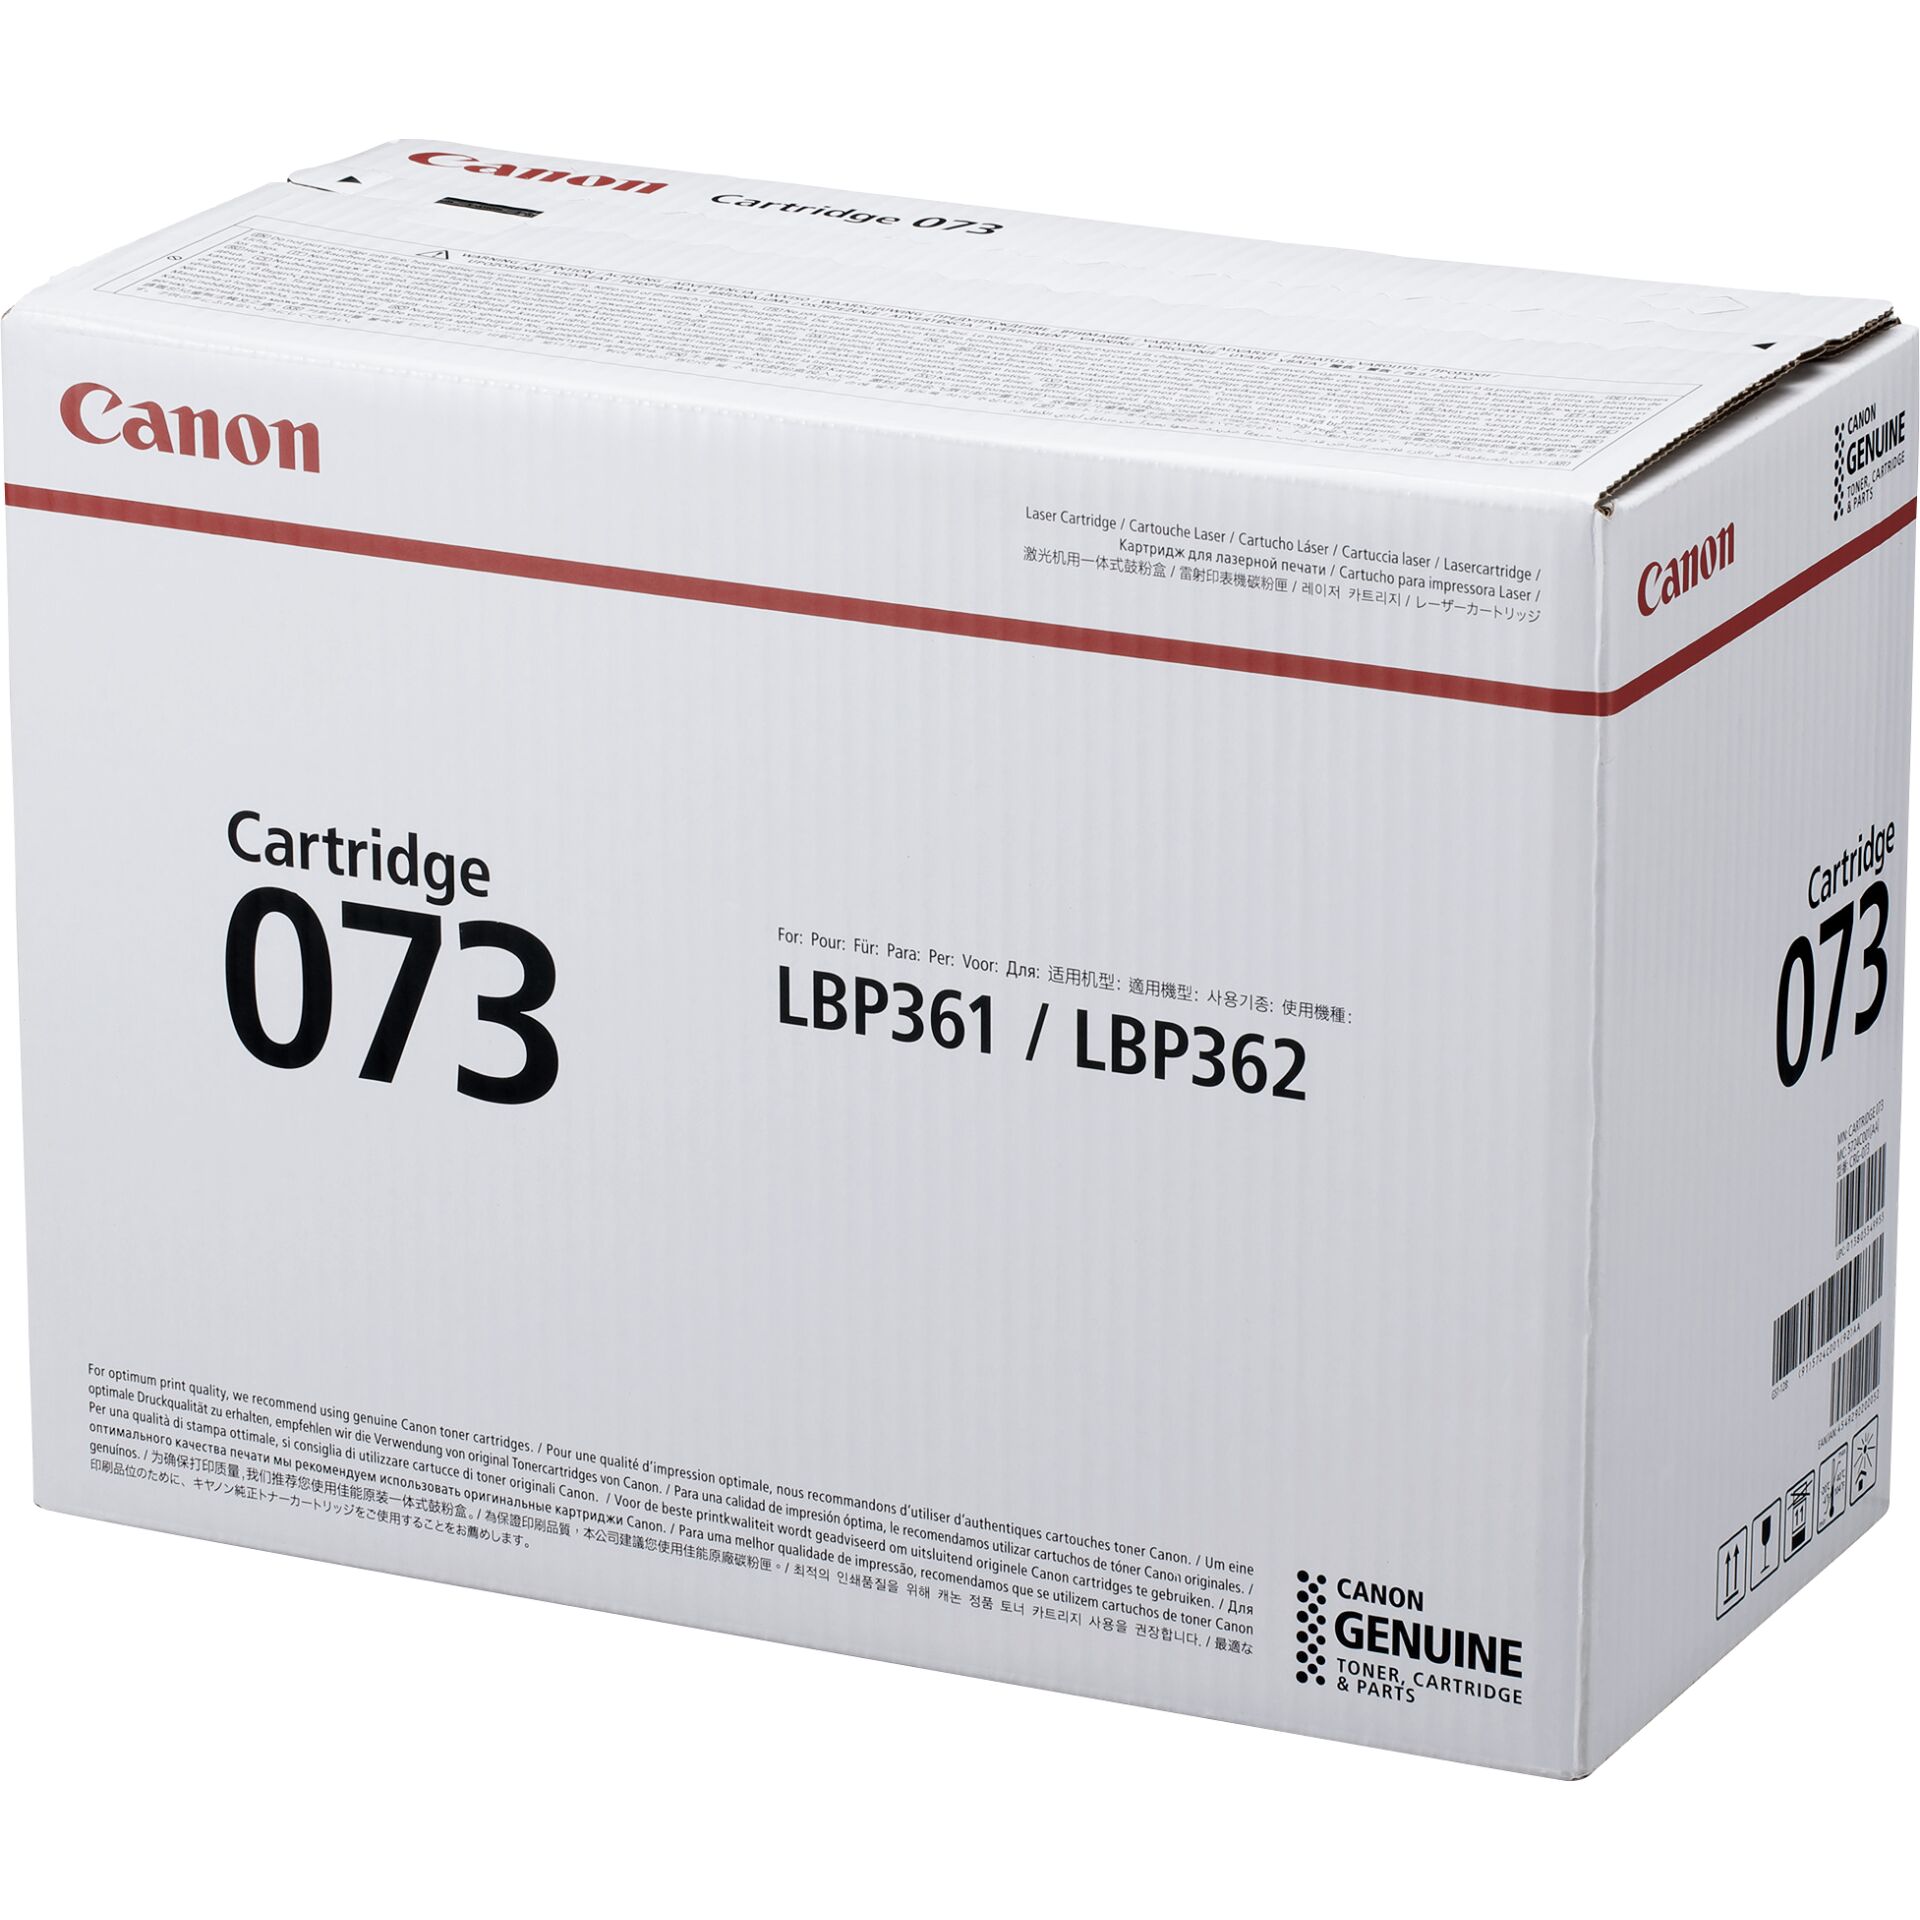 Canon Toner Cartridge 073 black